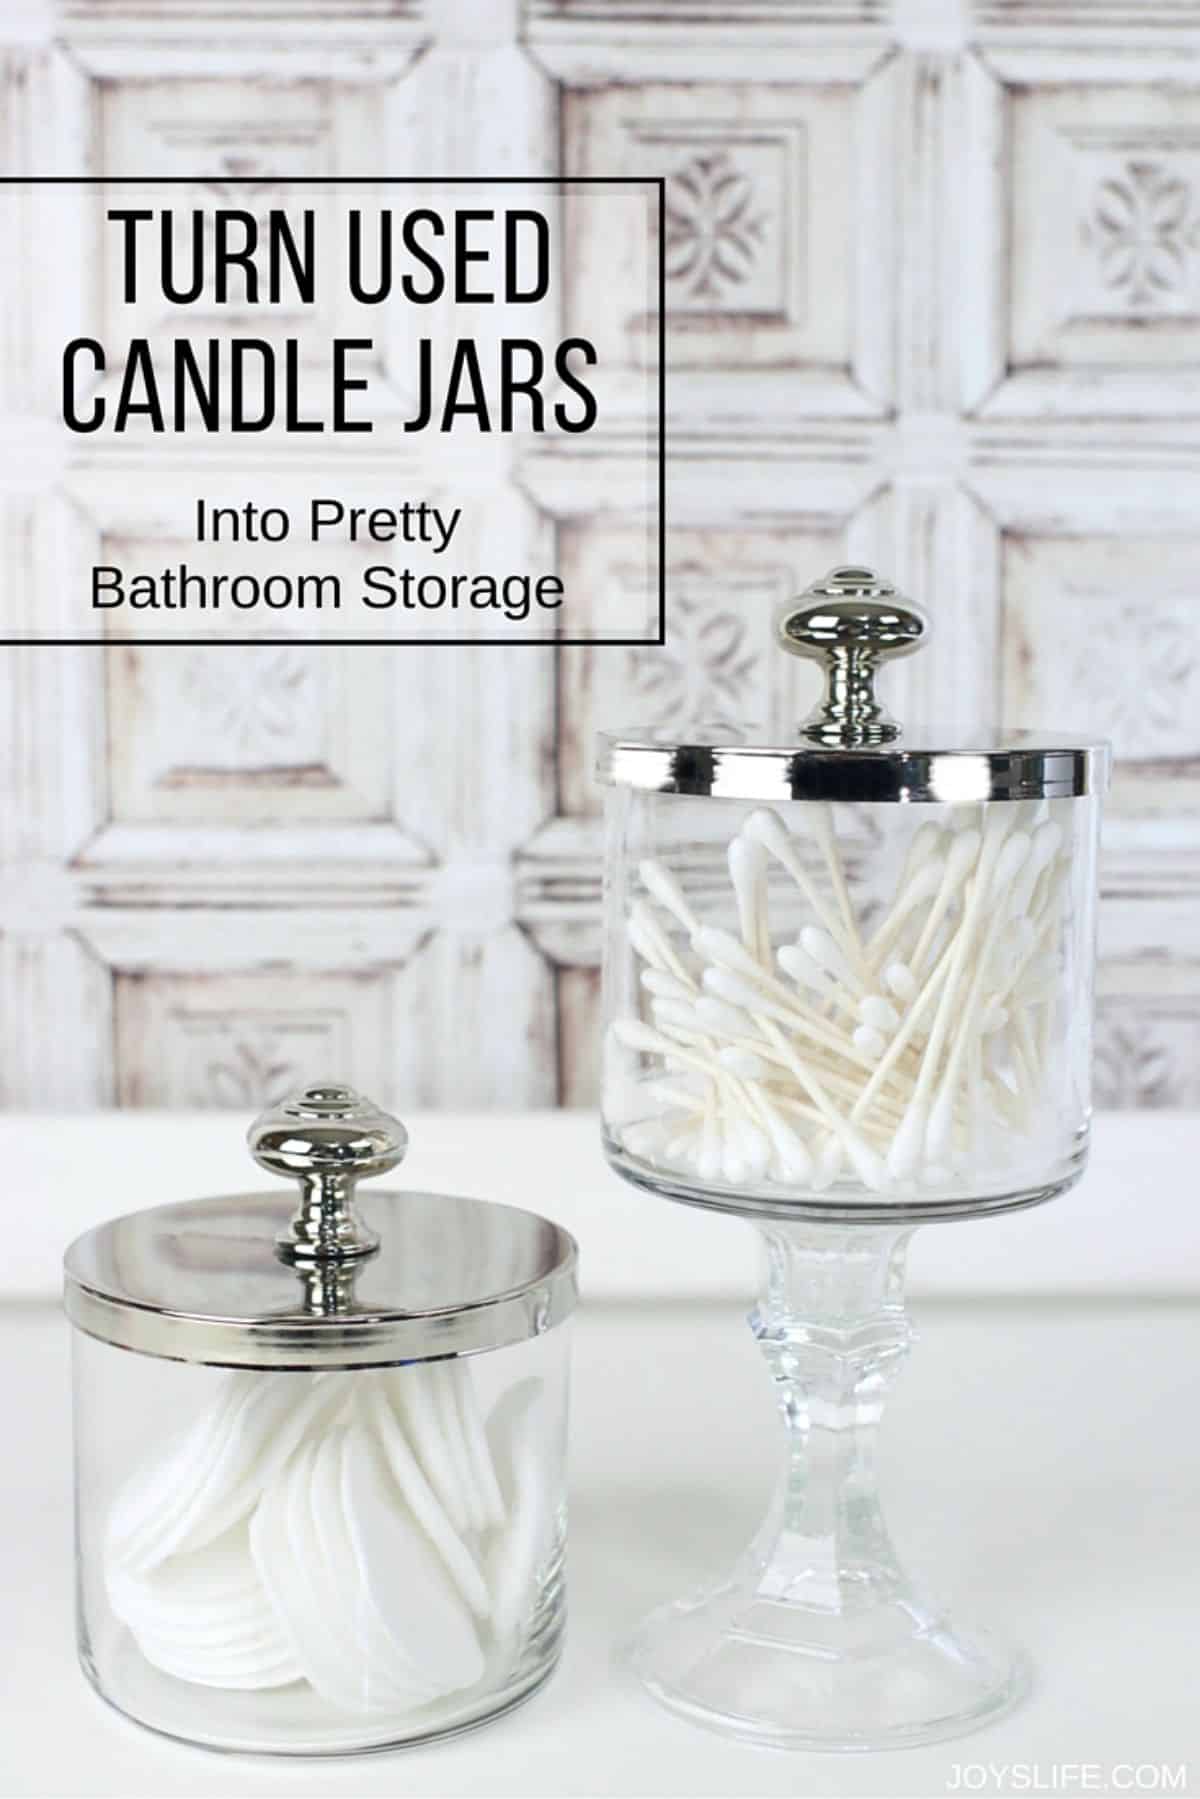 Turn Used Candle Jars Into Pretty Bathroom Storage